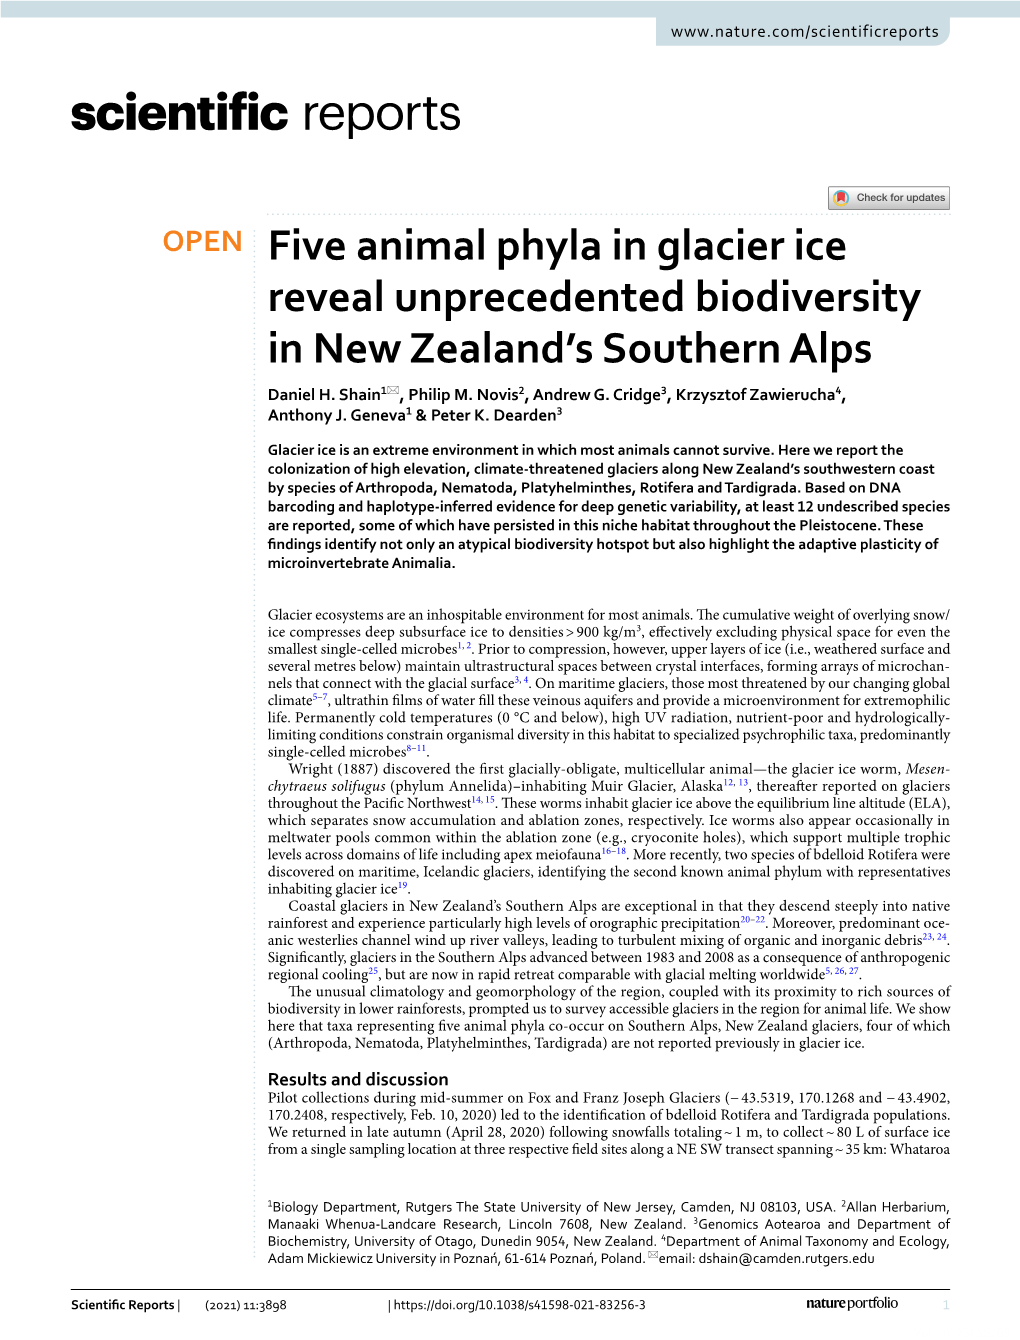 Five Animal Phyla in Glacier Ice Reveal Unprecedented Biodiversity in New Zealand’S Southern Alps Daniel H